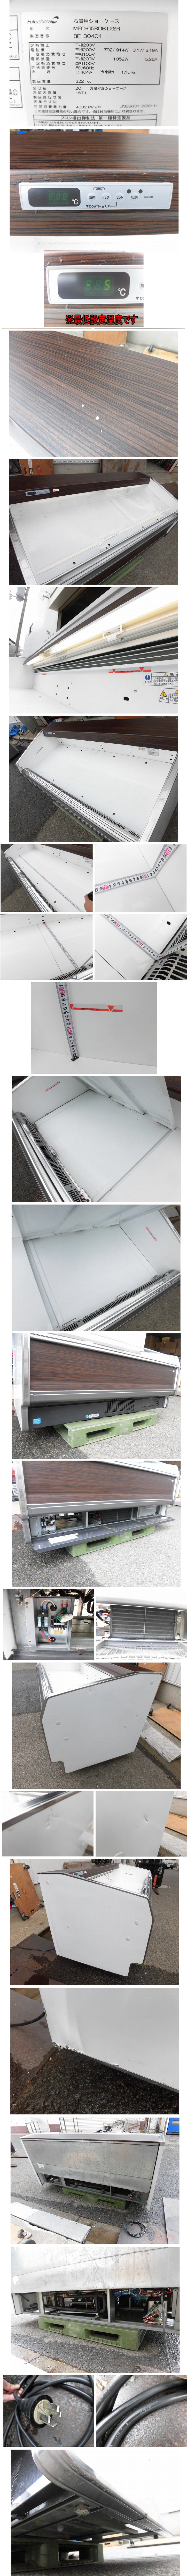 ☆Kかま8592 福島工業業務用167L 照明付平型オープン冷蔵ショーケースMFC-65ROBTXSR 三相200V 厨房機器陳列冷蔵ショーケース|  JChere雅虎拍卖代购